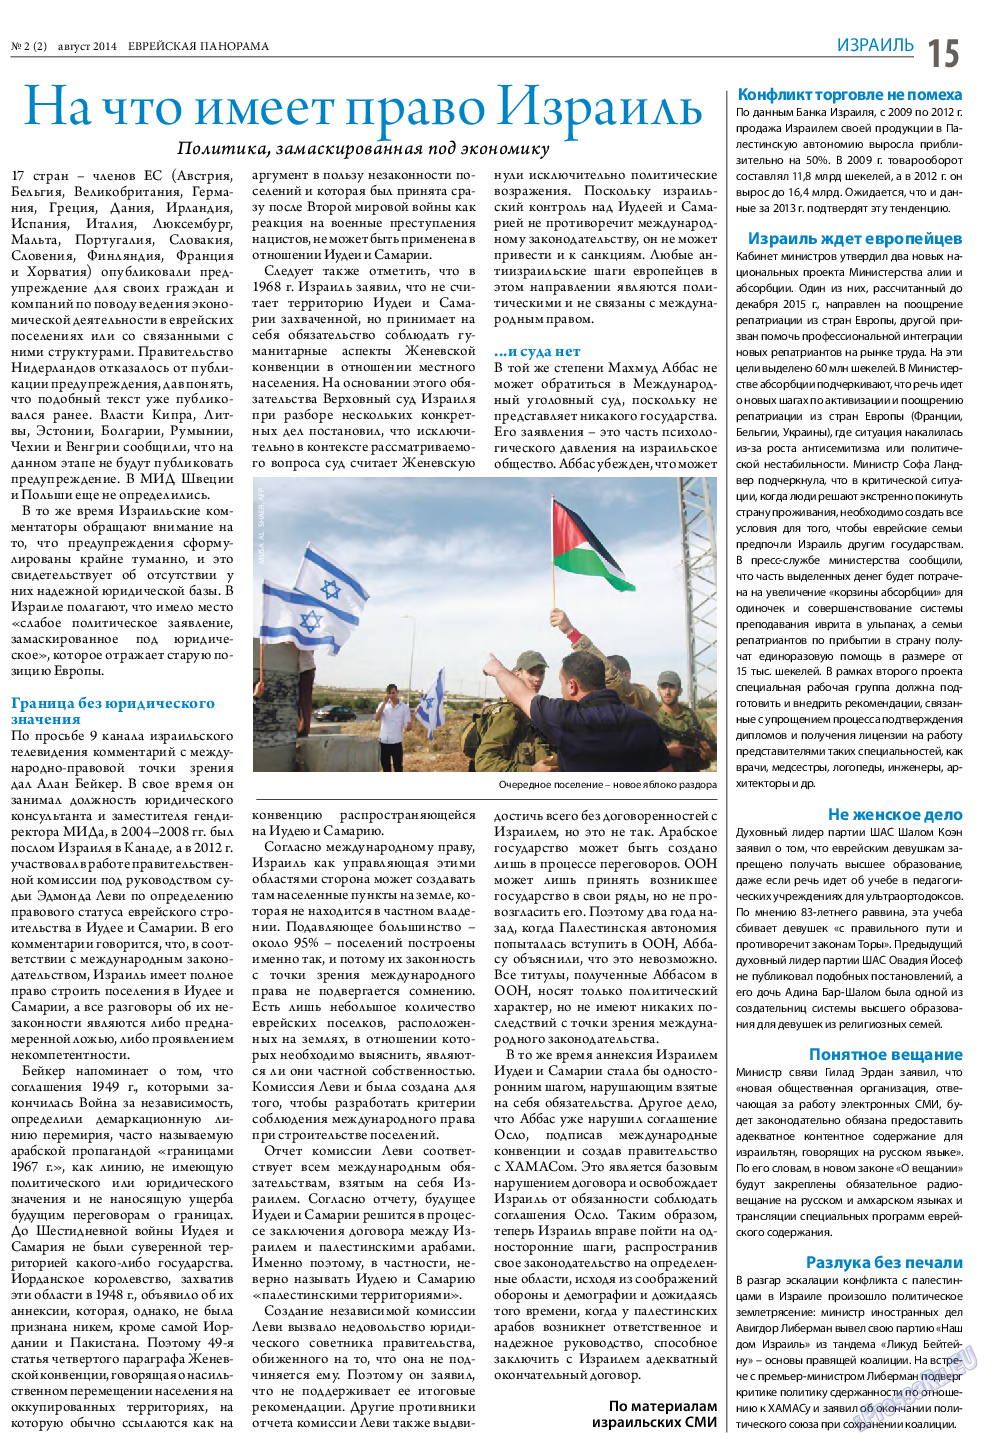 Еврейская панорама, газета. 2014 №2 стр.15